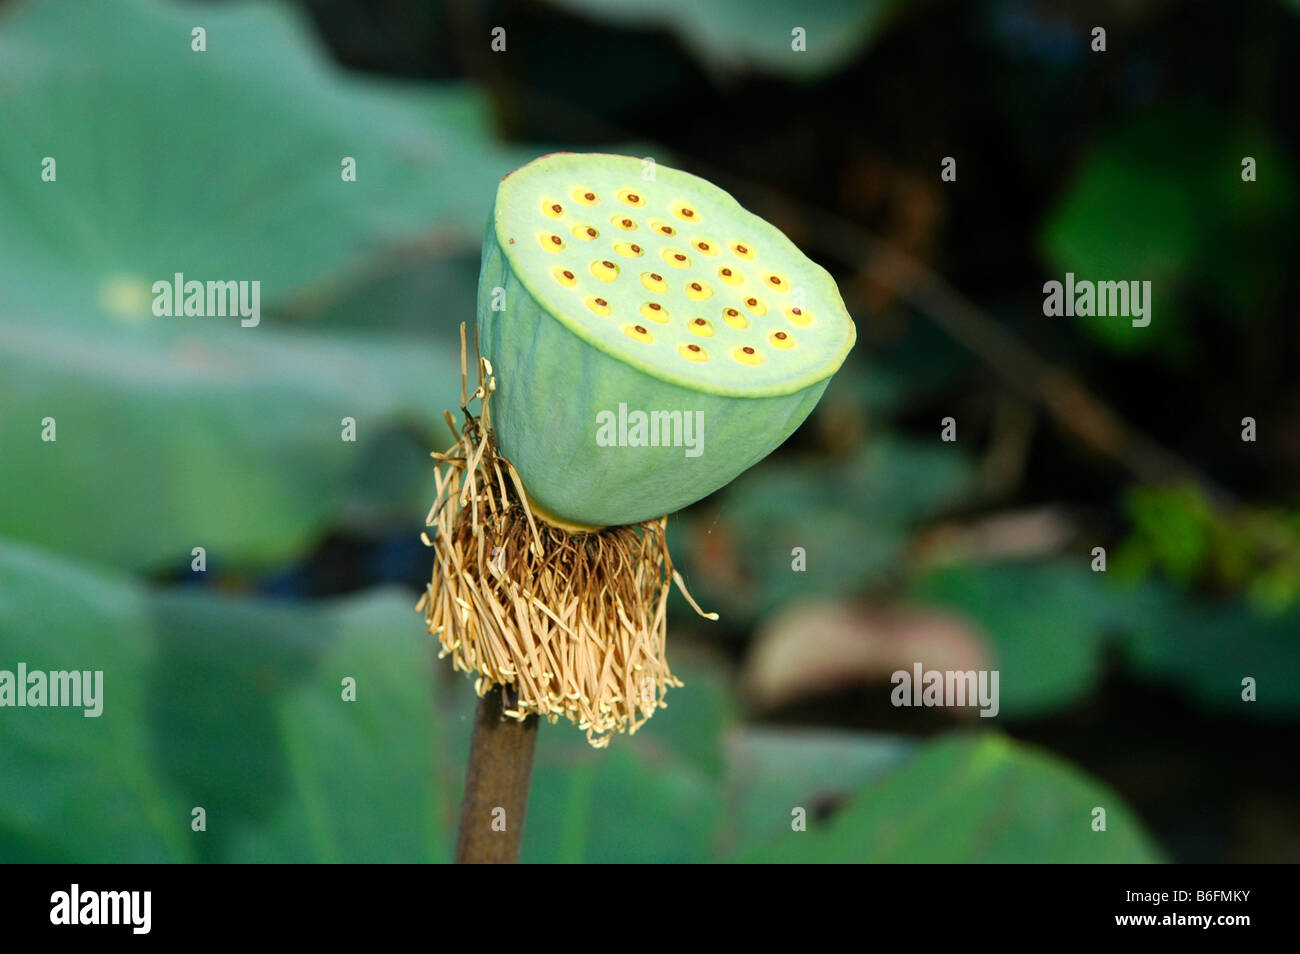 Seed capsule of the Indian Lotus (Nelumbo nucifera) Stock Photo